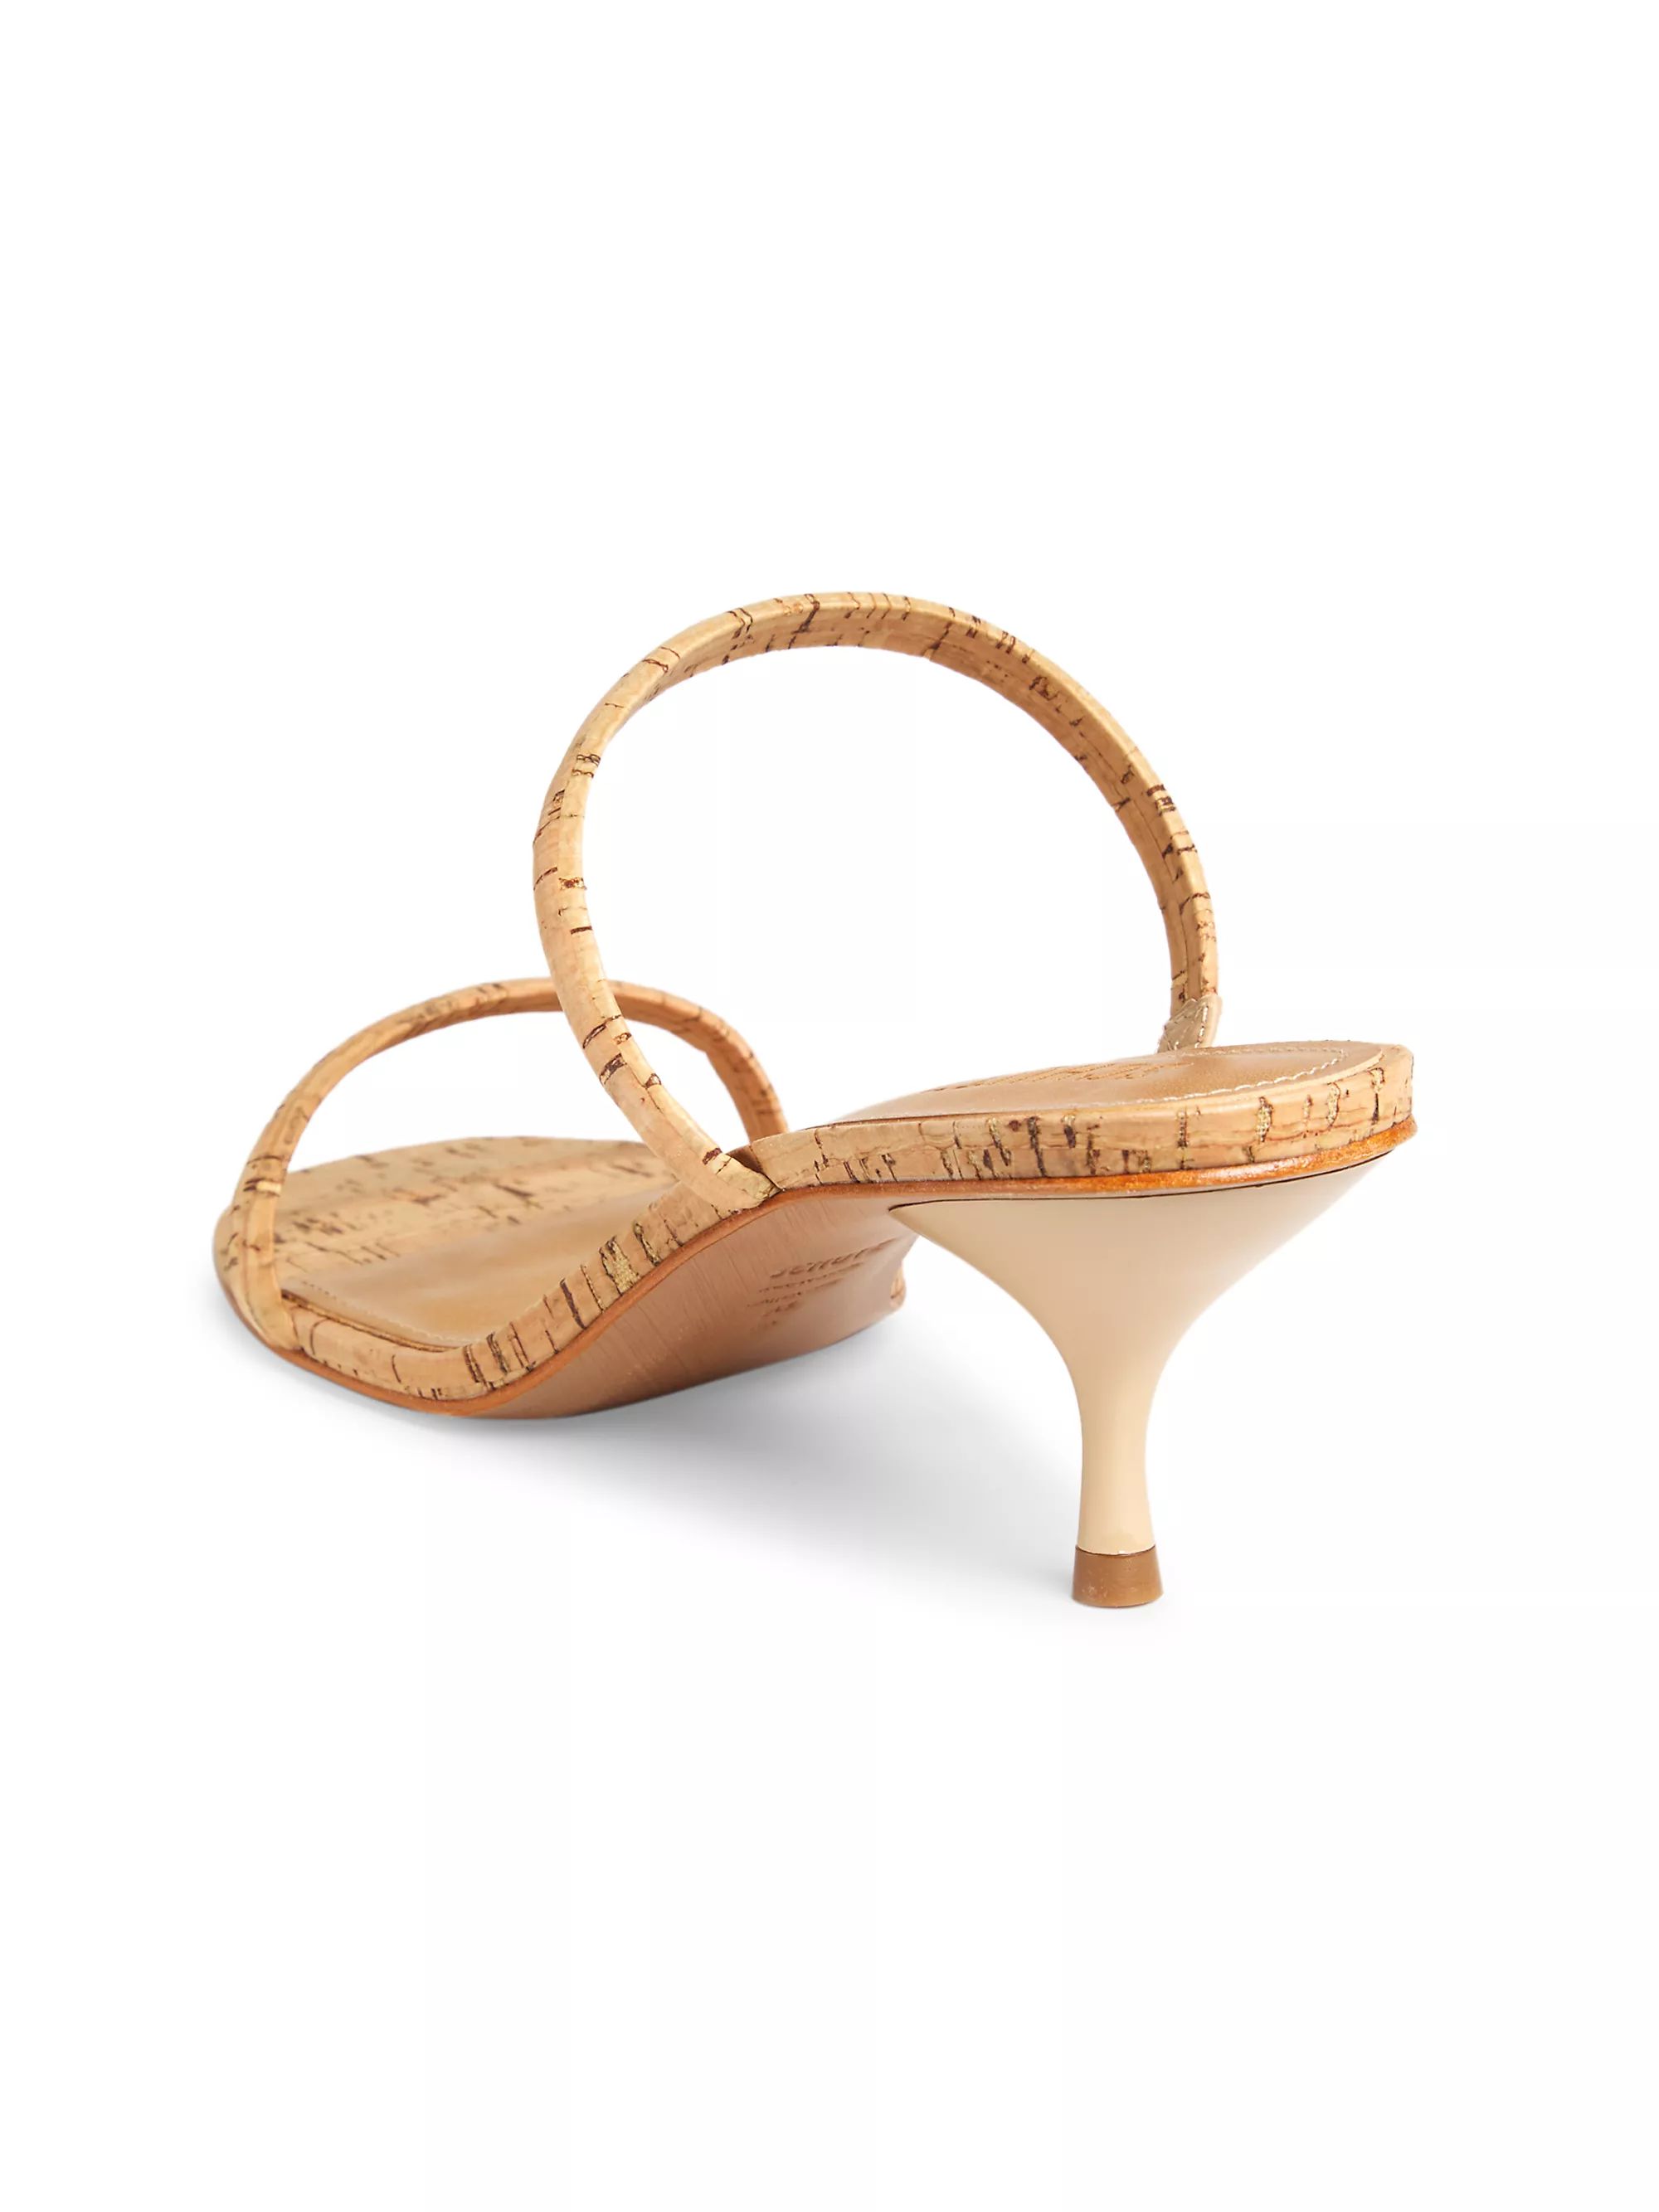 SandalsHeelsSchutzTaliah 65MM Cork Sandals$128 | Saks Fifth Avenue